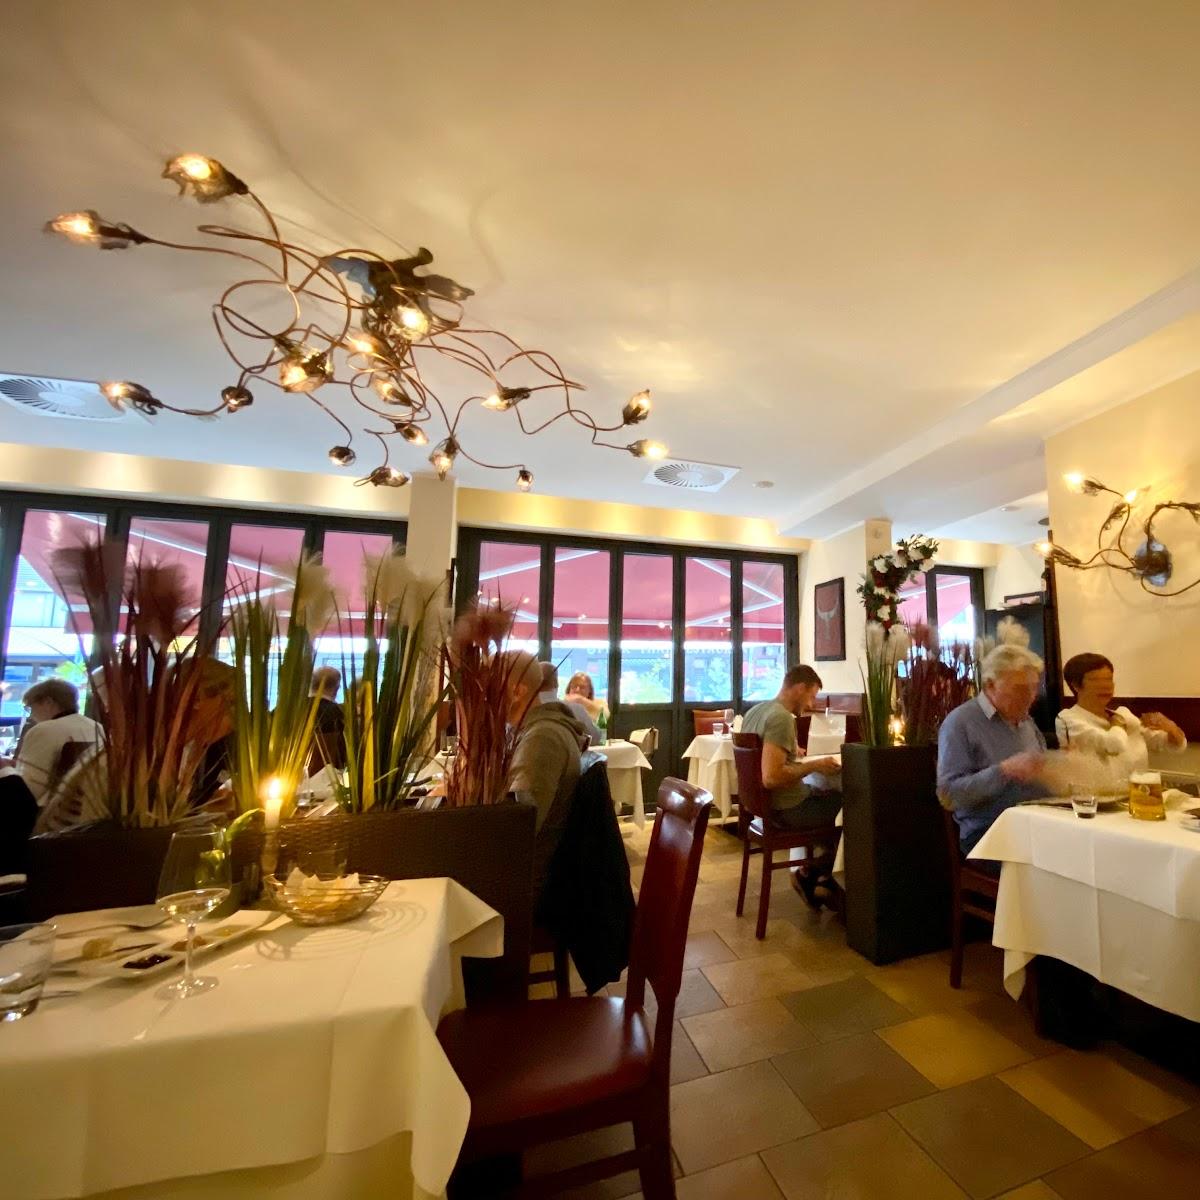 Restaurant "Ristorante Sardegna UG" in Frankfurt am Main